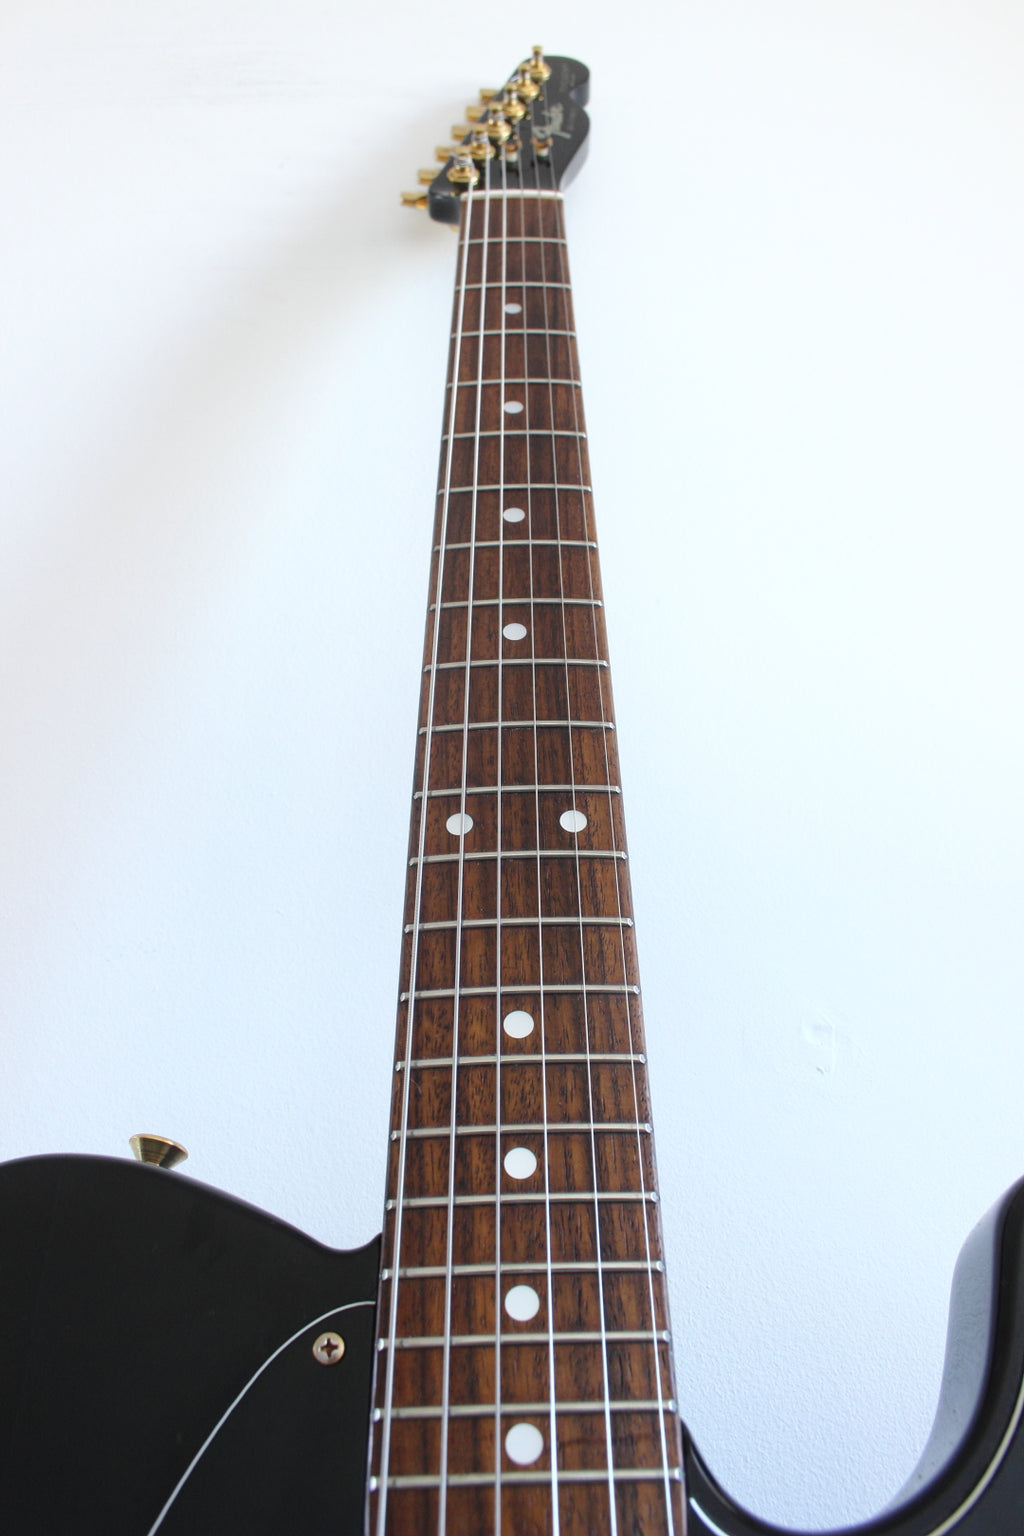 Fender Telecaster Special '52 Reissue Black/Gold 1993/4